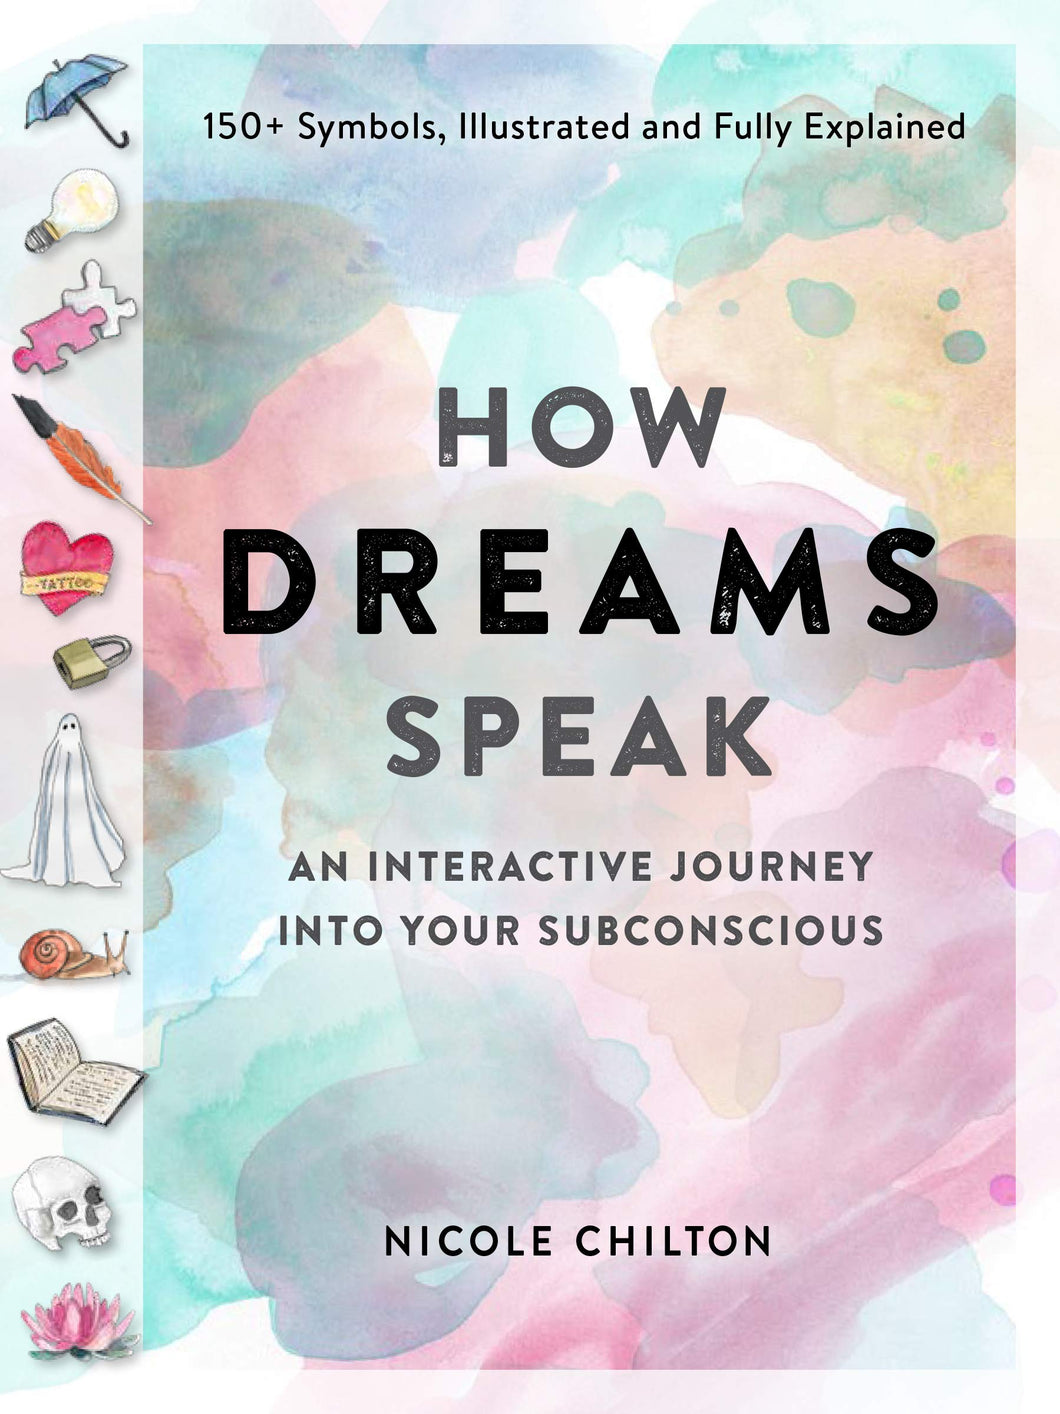 How Dreams Speak: An Interactive Journey into Your Subconscious [Nicole Chilton]